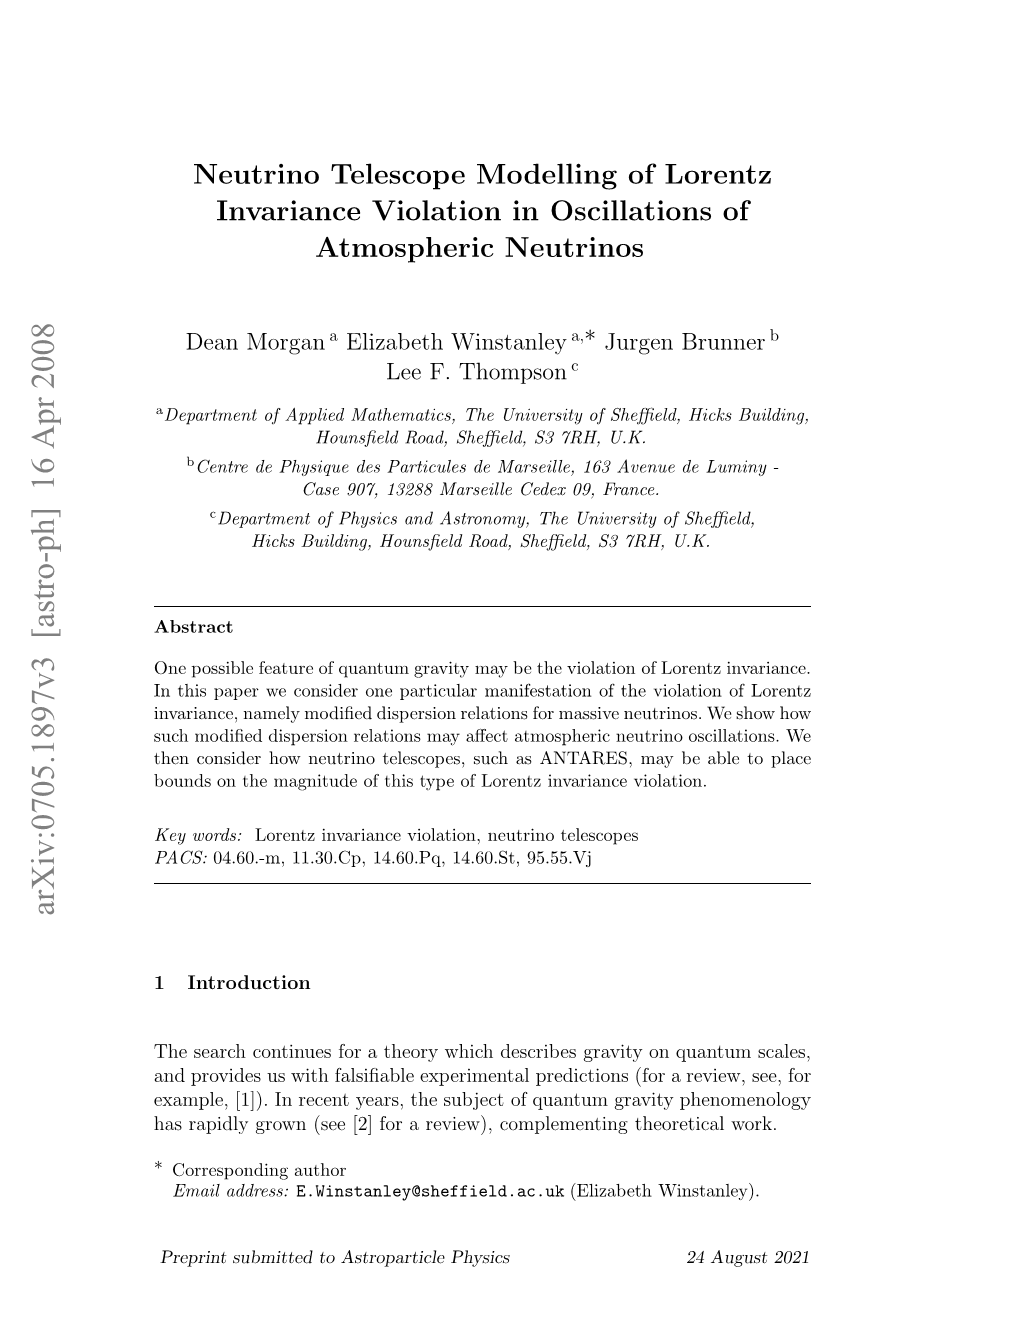 Neutrino Telescope Modelling of Lorentz Invariance Violation